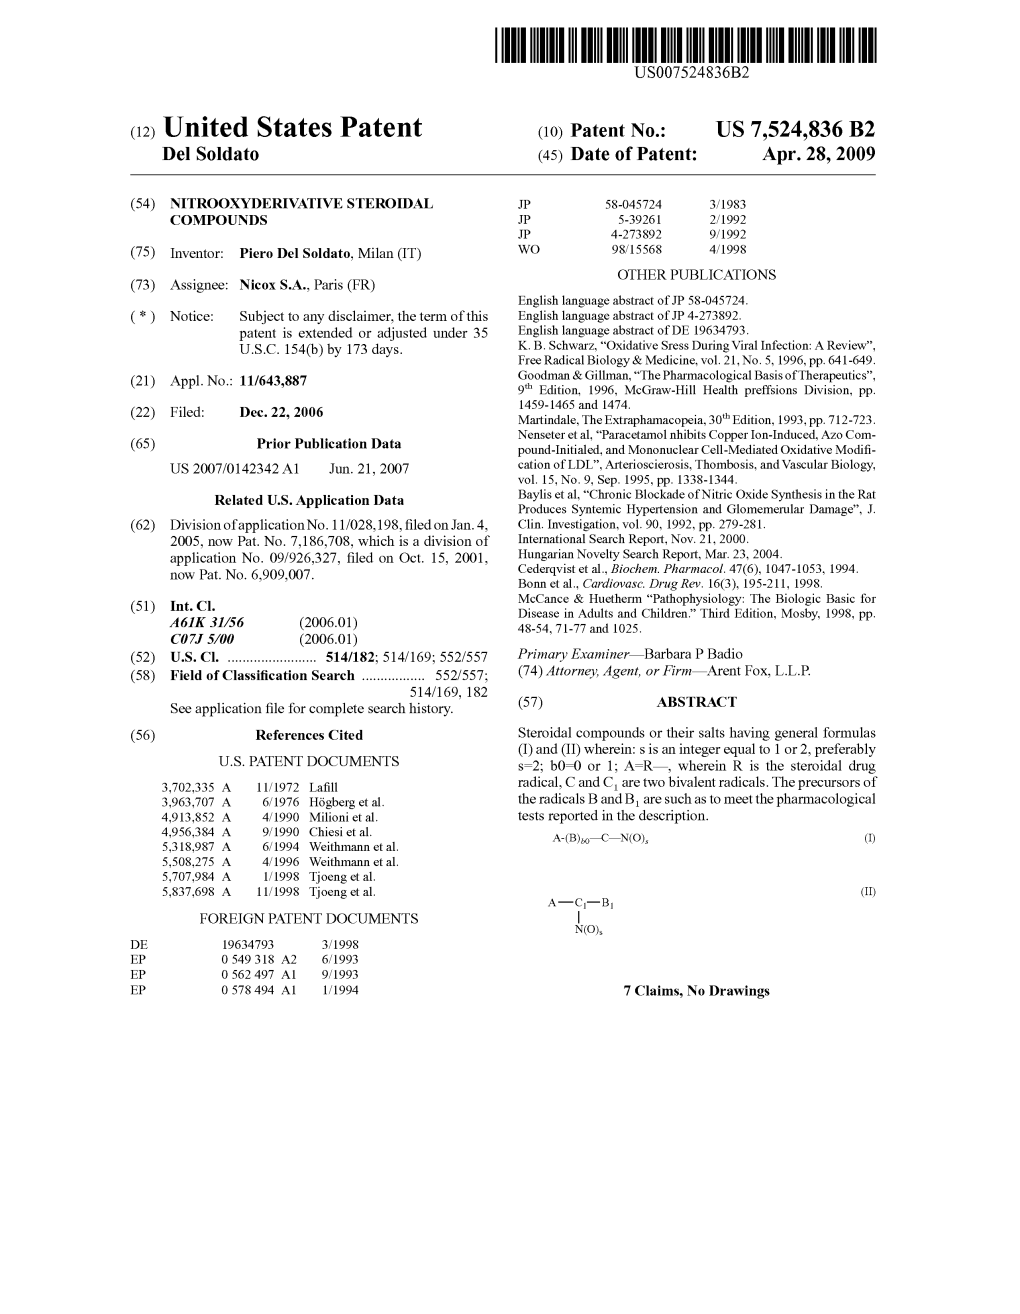 United States Patent (10) Patent No.: US 7,524,836 B2 Del Soldato (45) Date of Patent: Apr